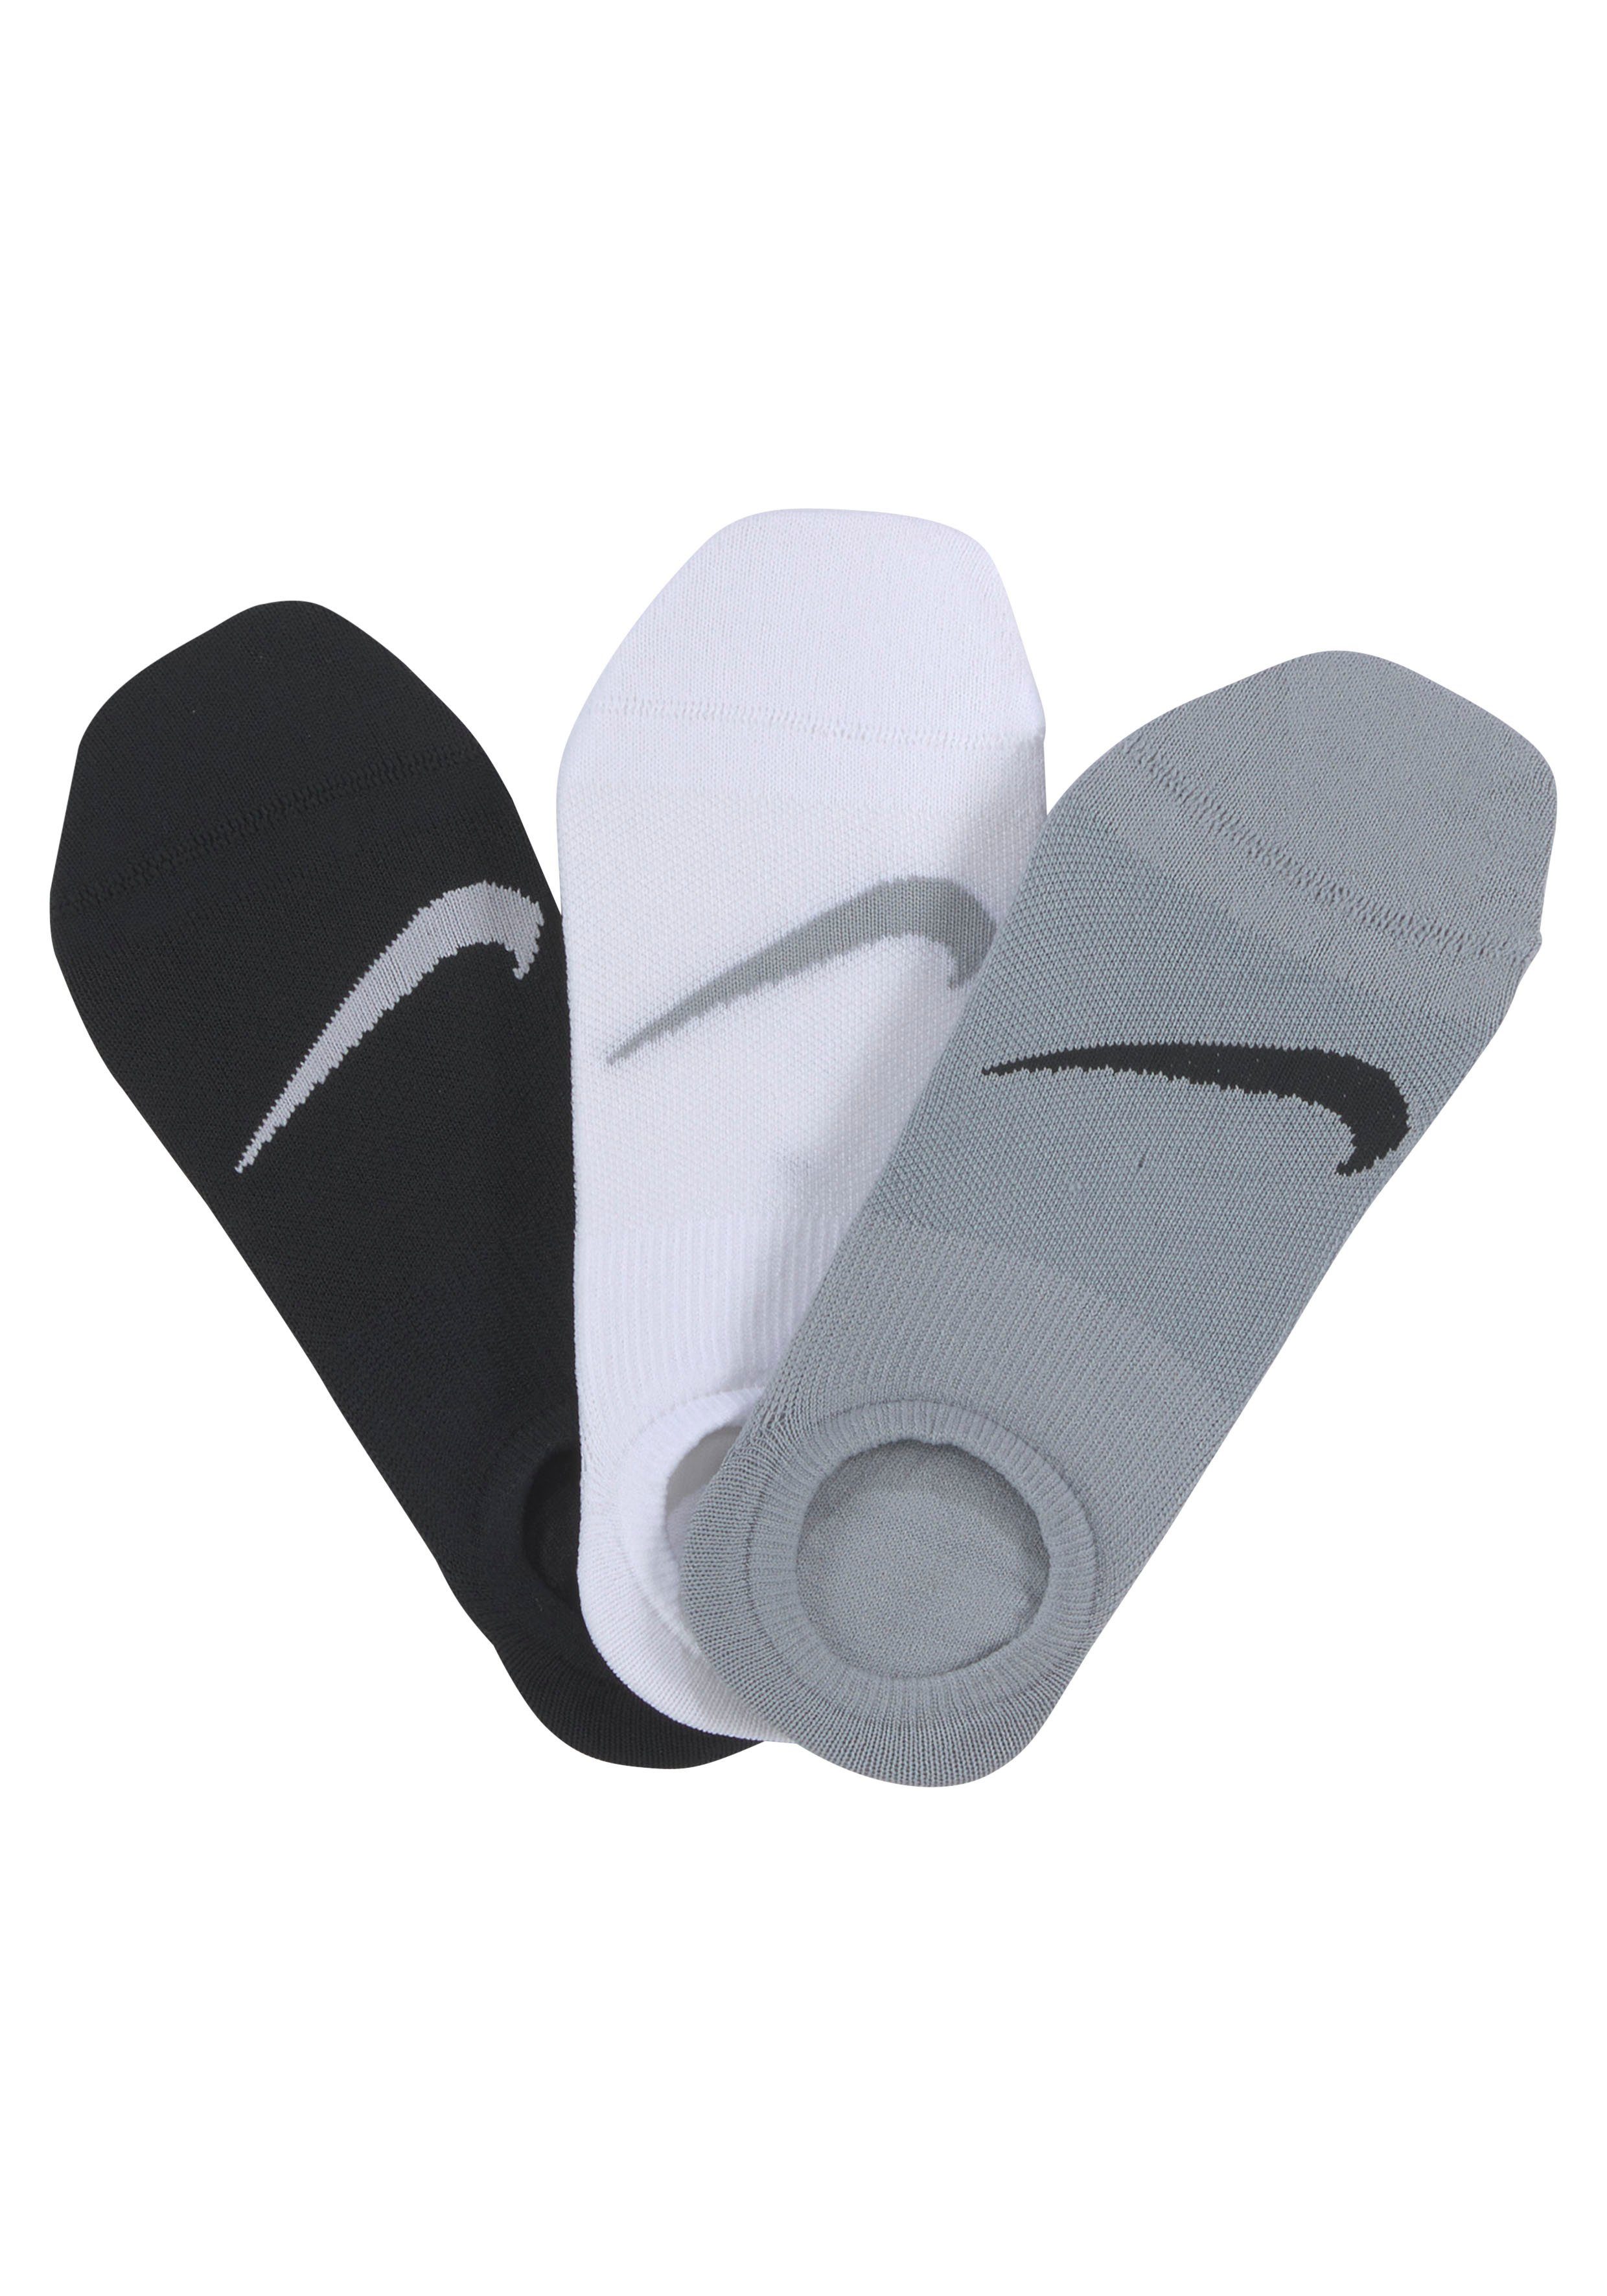 Nike Füßlinge (3-Paar) mit atmungsaktivem Mesh 1x schwarz, 1x grau, 1x weiß | 